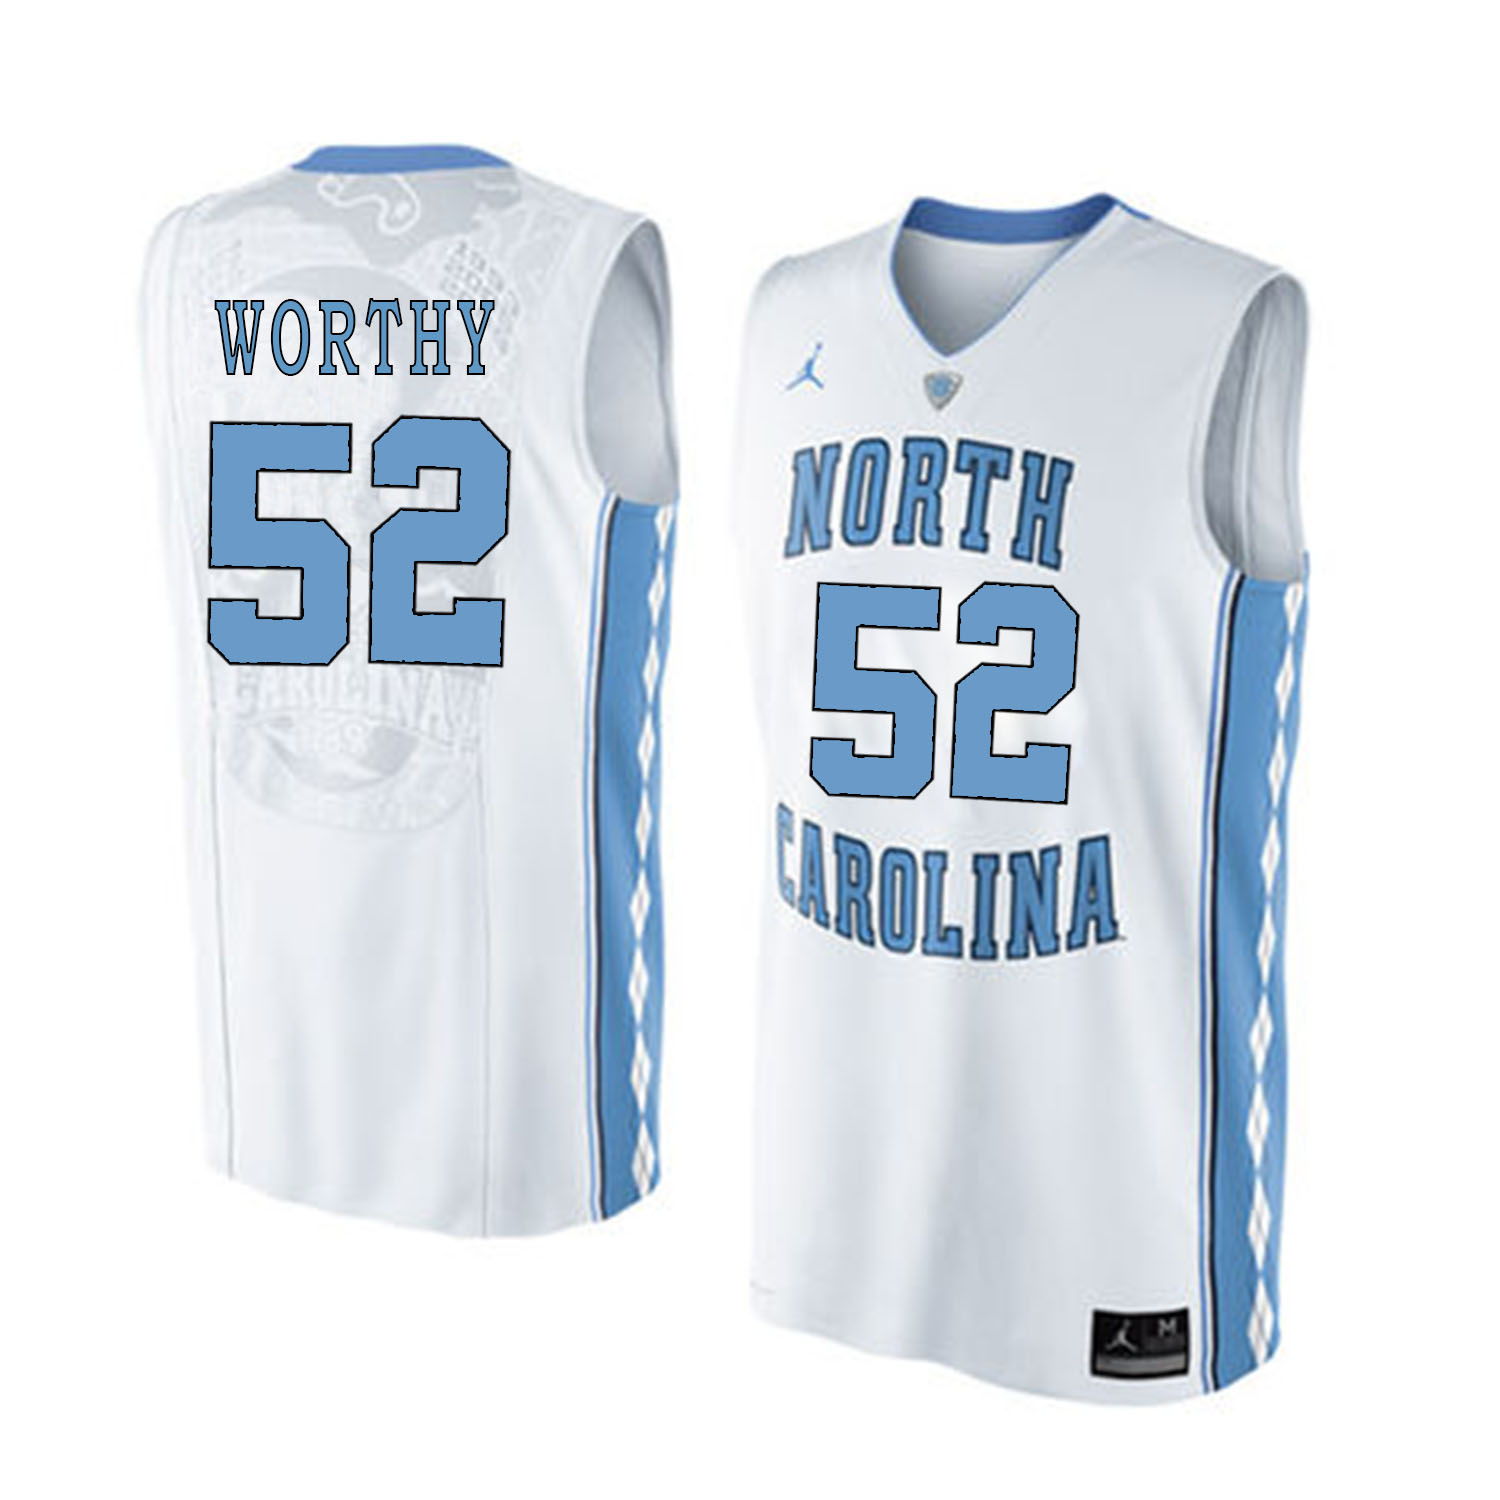 North Carolina Tar Heels 52 James Worthy White College Basketball Jersey